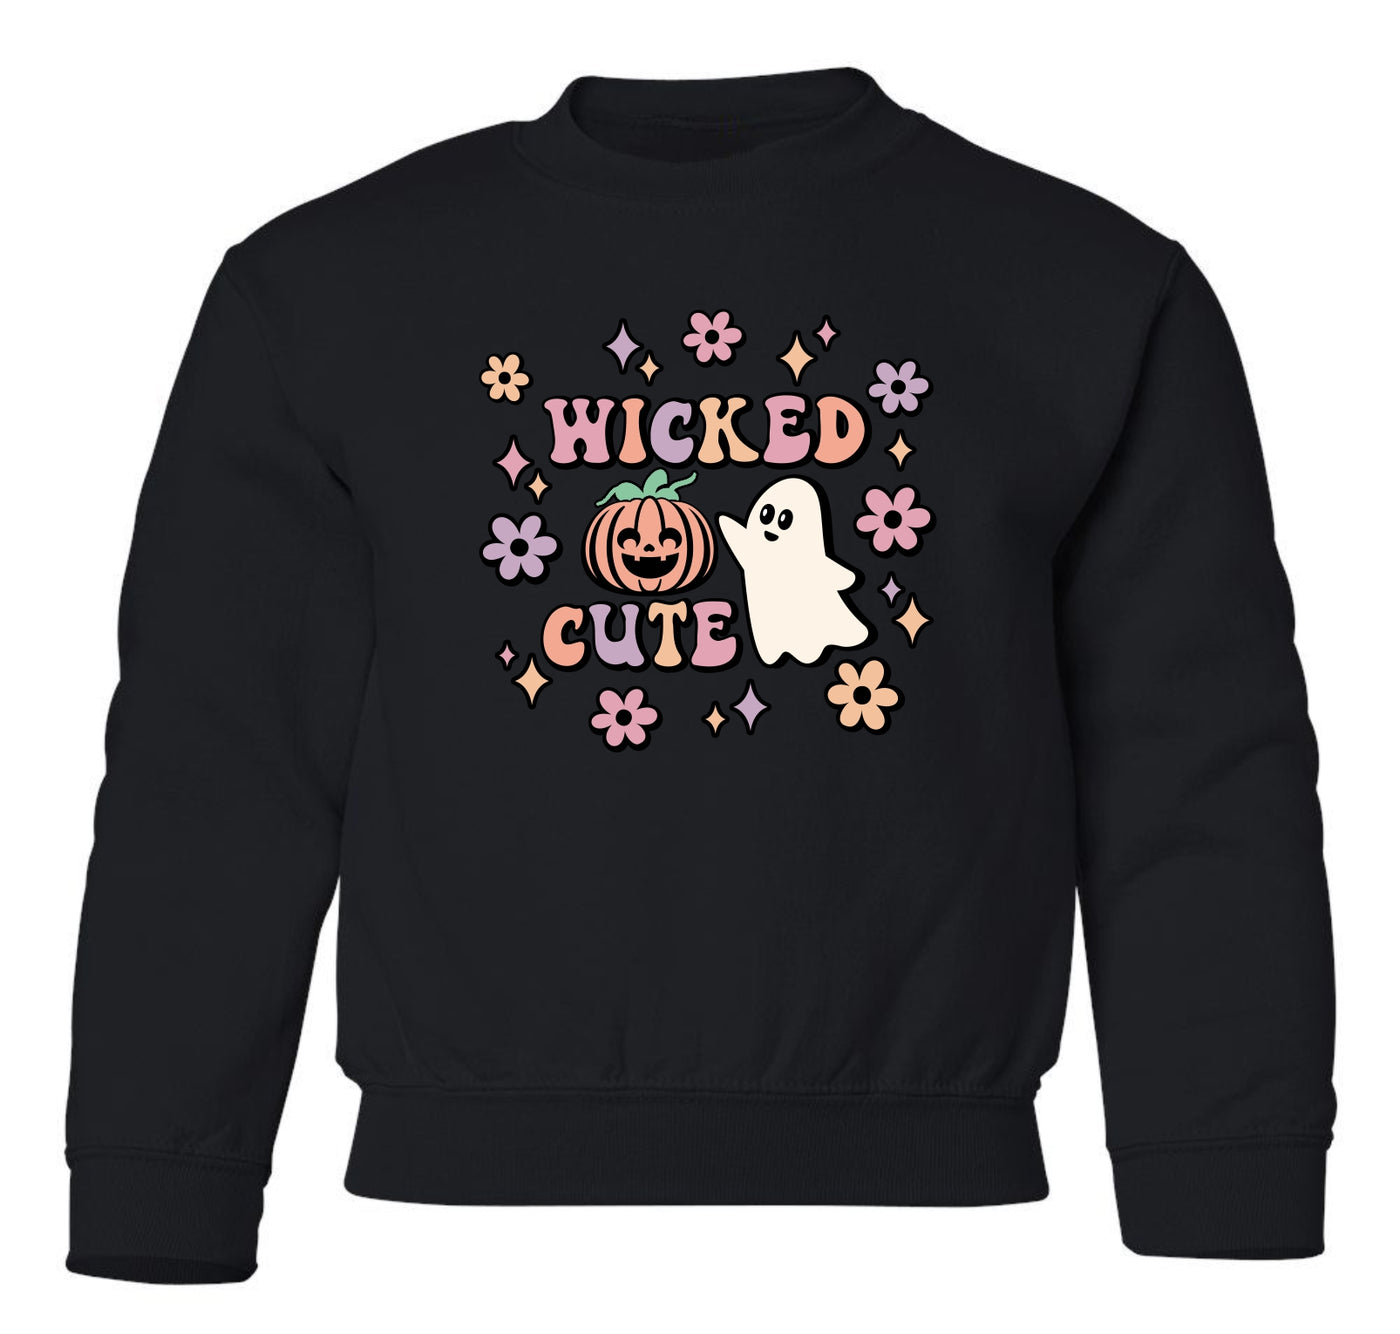 "Wicked Cute" Toddler/Youth Crewneck Sweatshirt